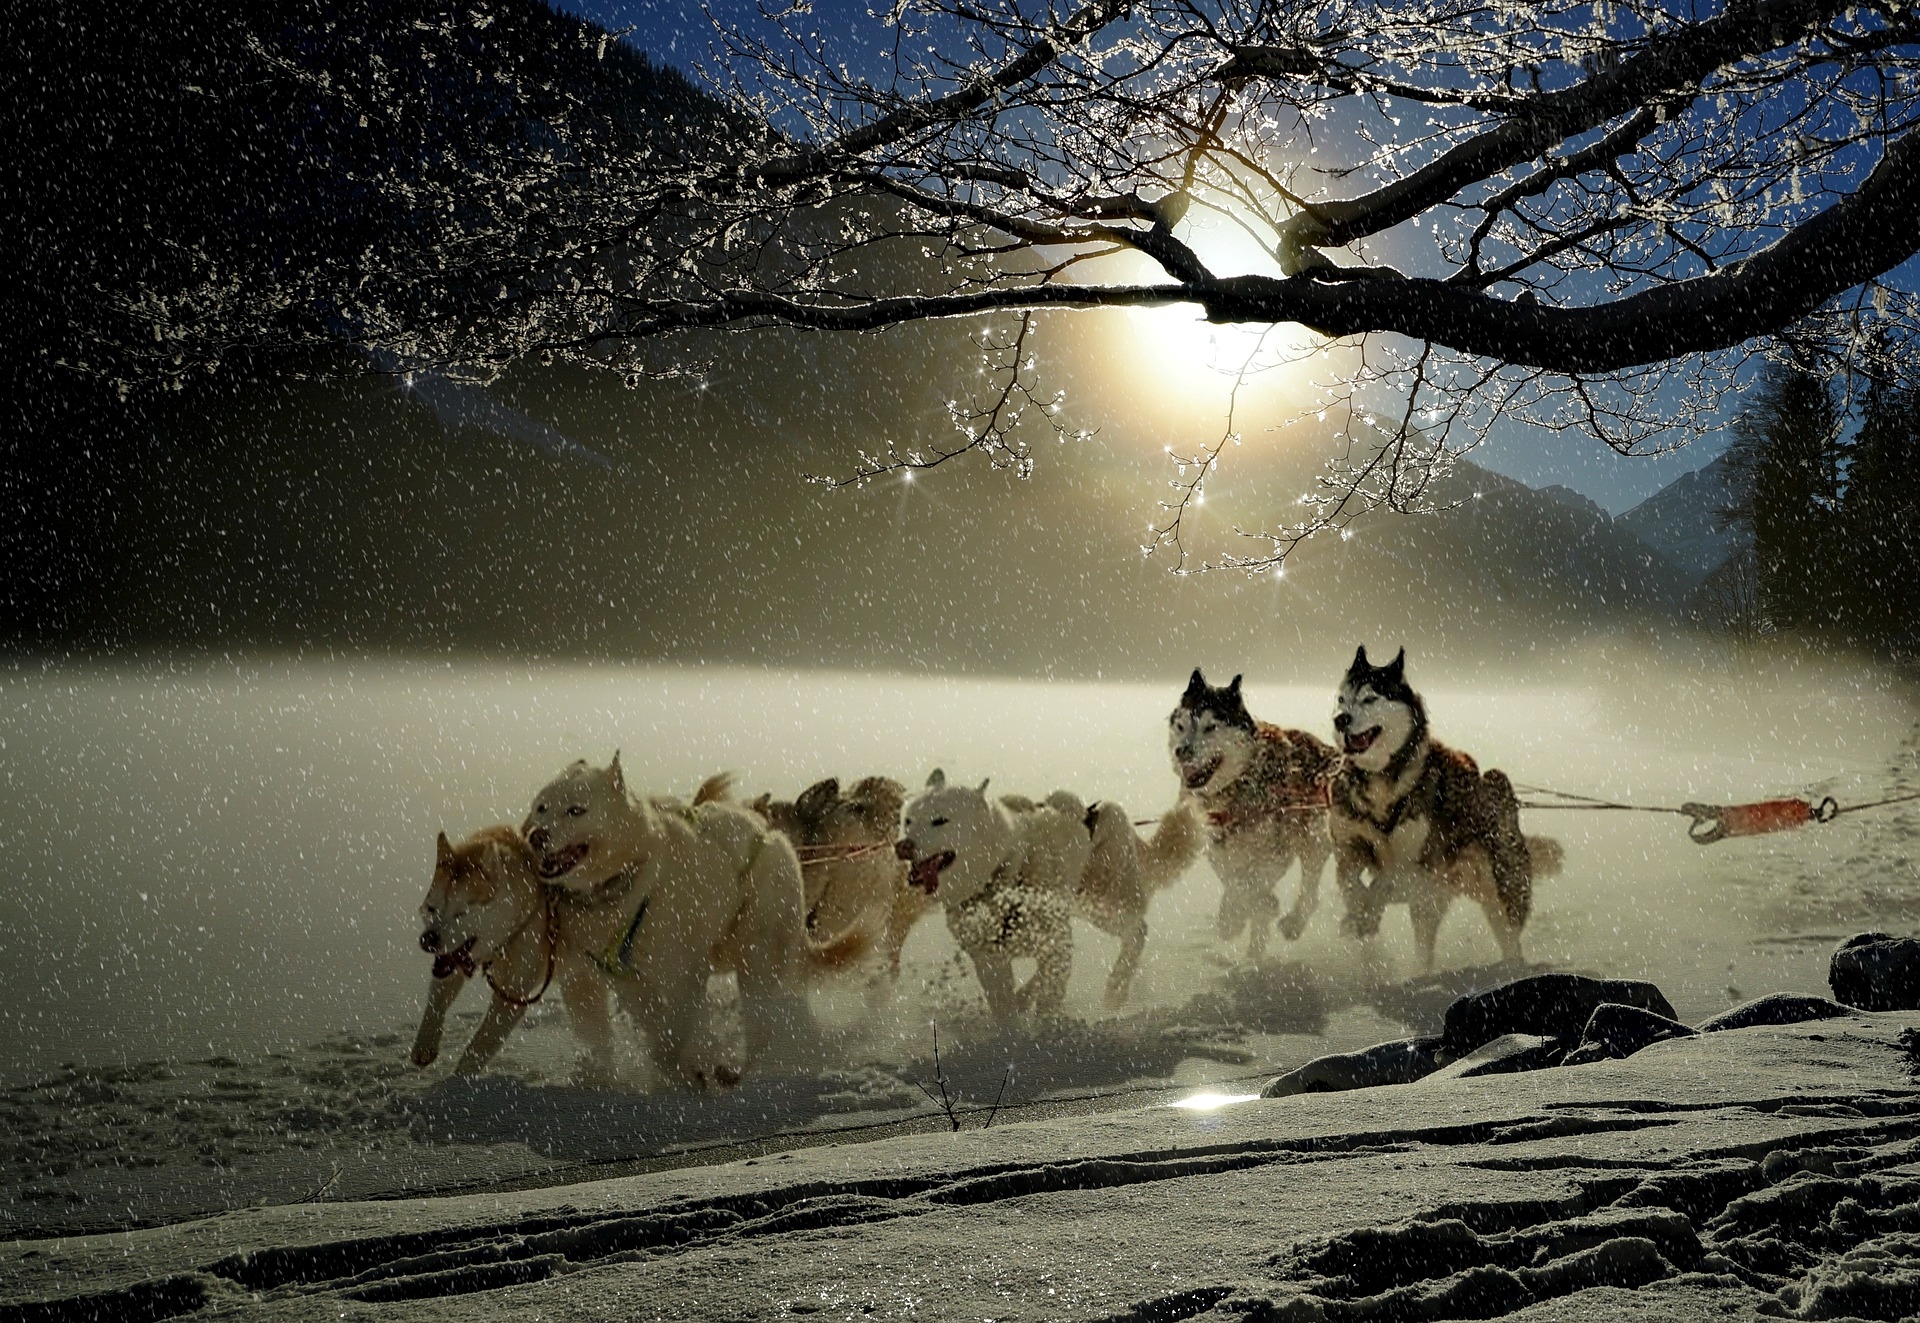 https://pixabay.com/hu/kuty%C3%A1k-huskies-%C3%A1llati-kutya-verseny-2921382/